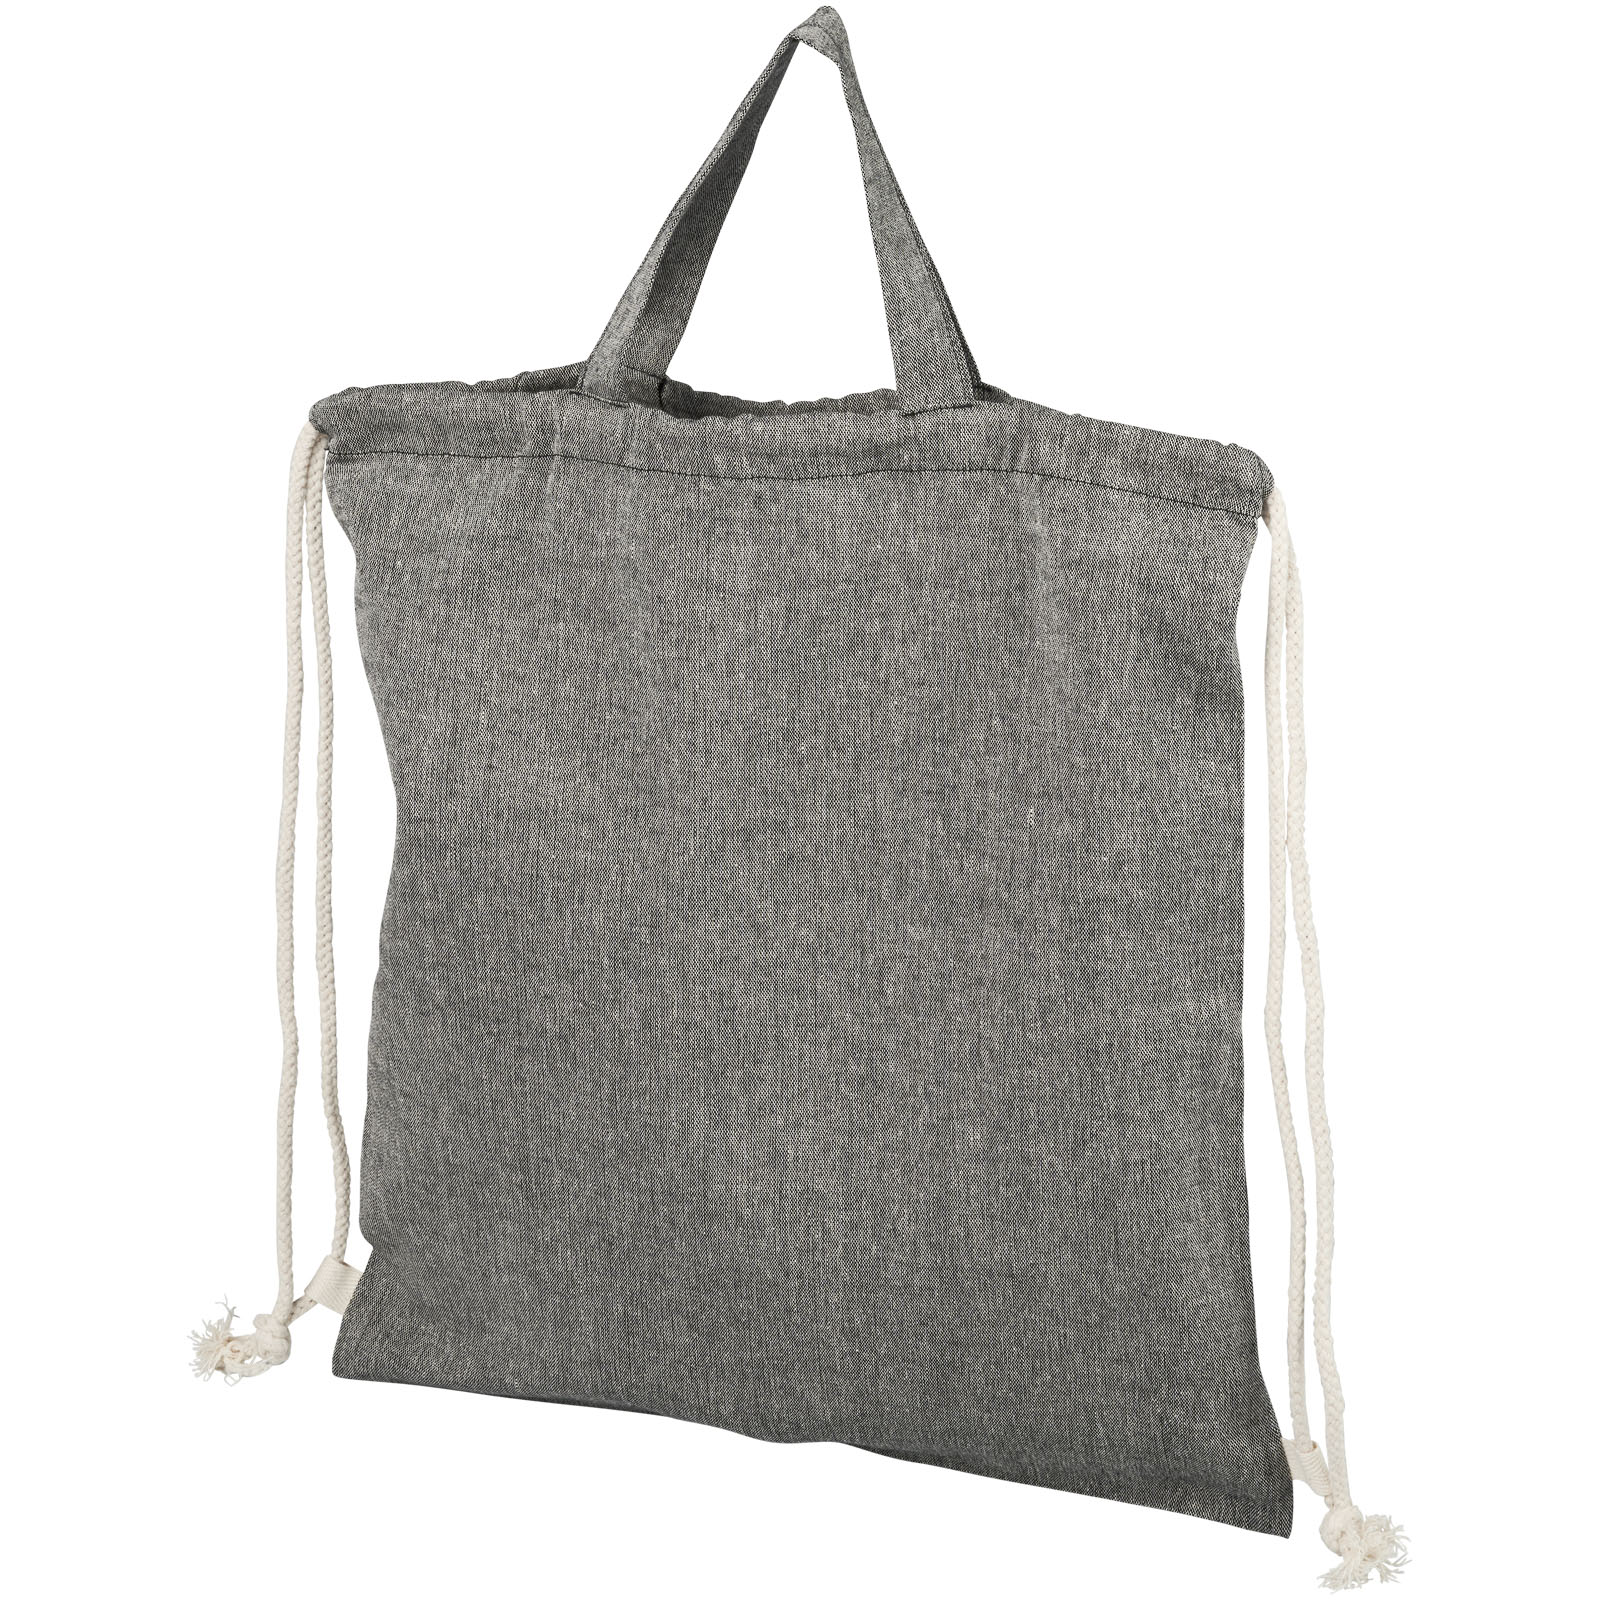 Advertising Drawstring Bags - Pheebs 150 g/m² recycled drawstring bag 6L